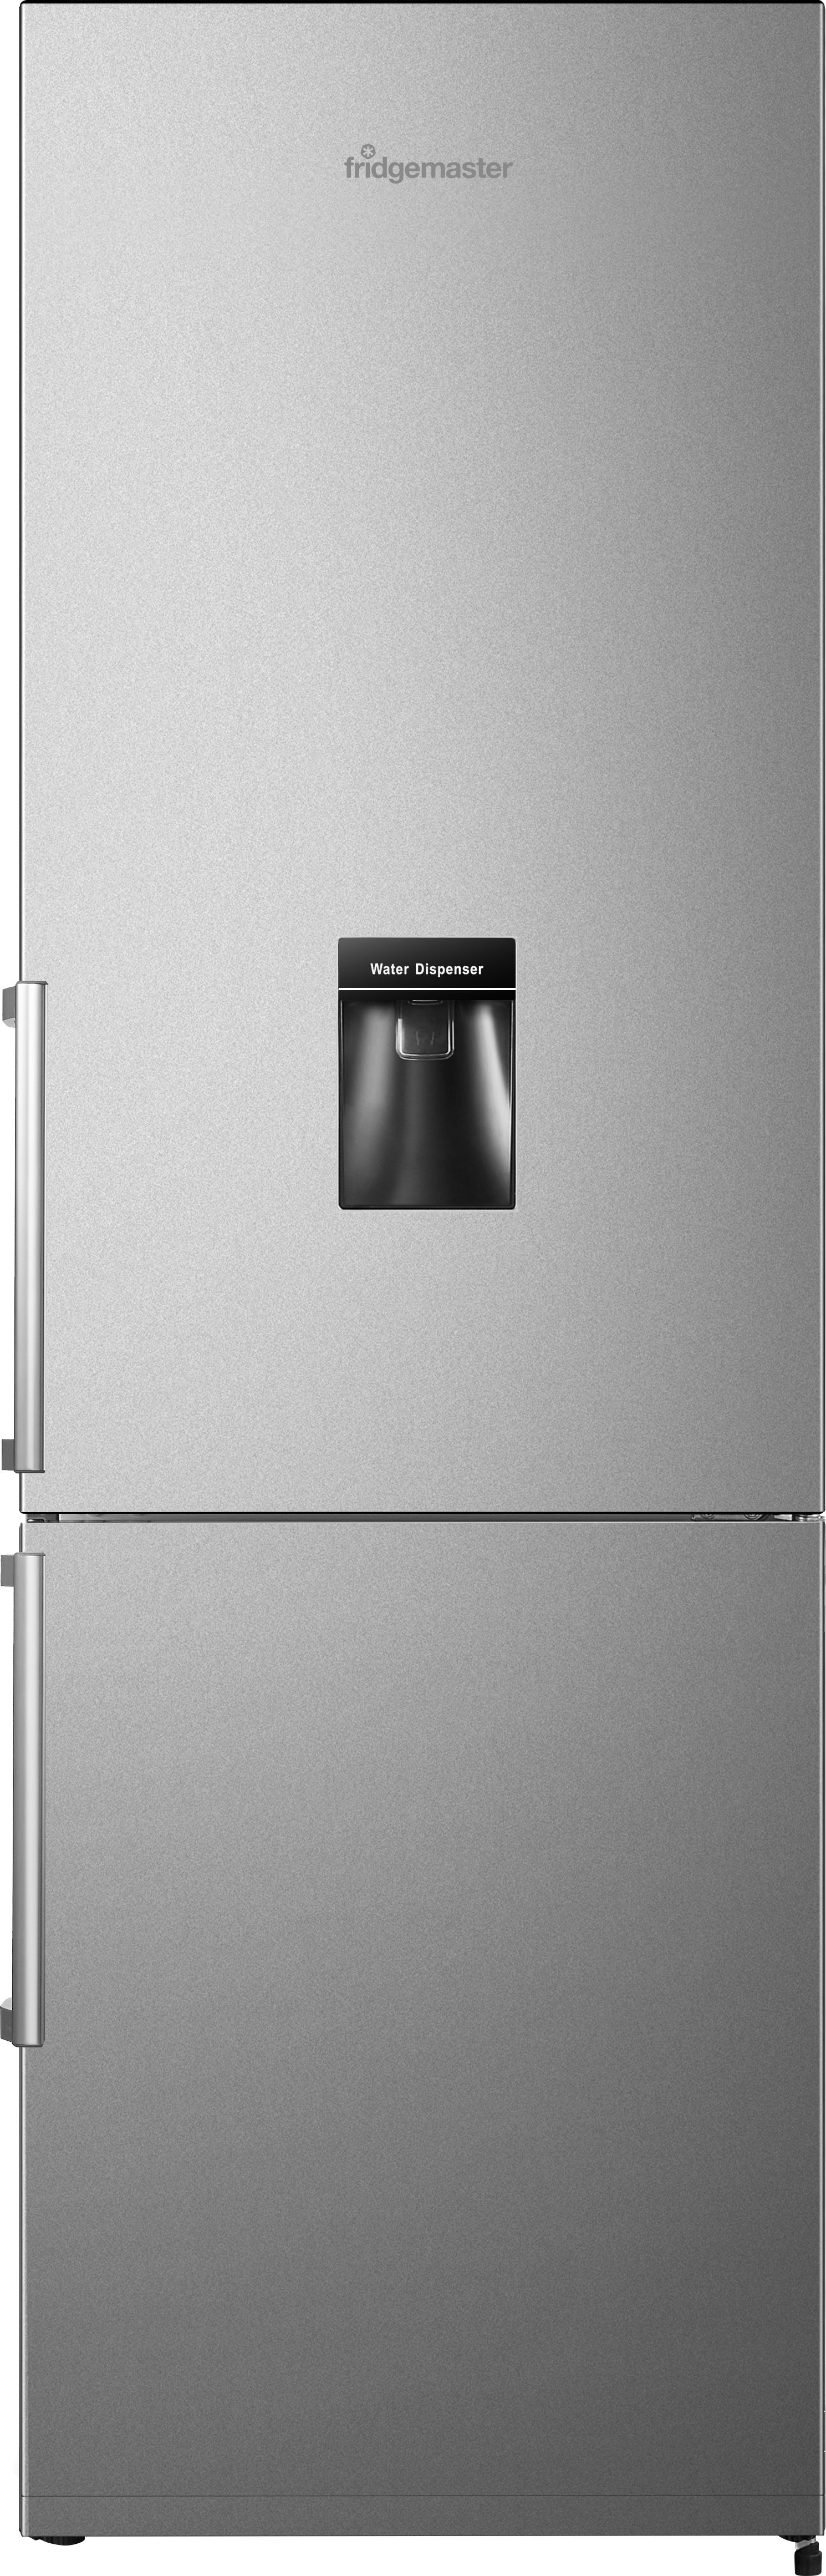 Fridgemaster MC55265DES 70/30 Fridge Freezer - Silver - E Rated, Silver